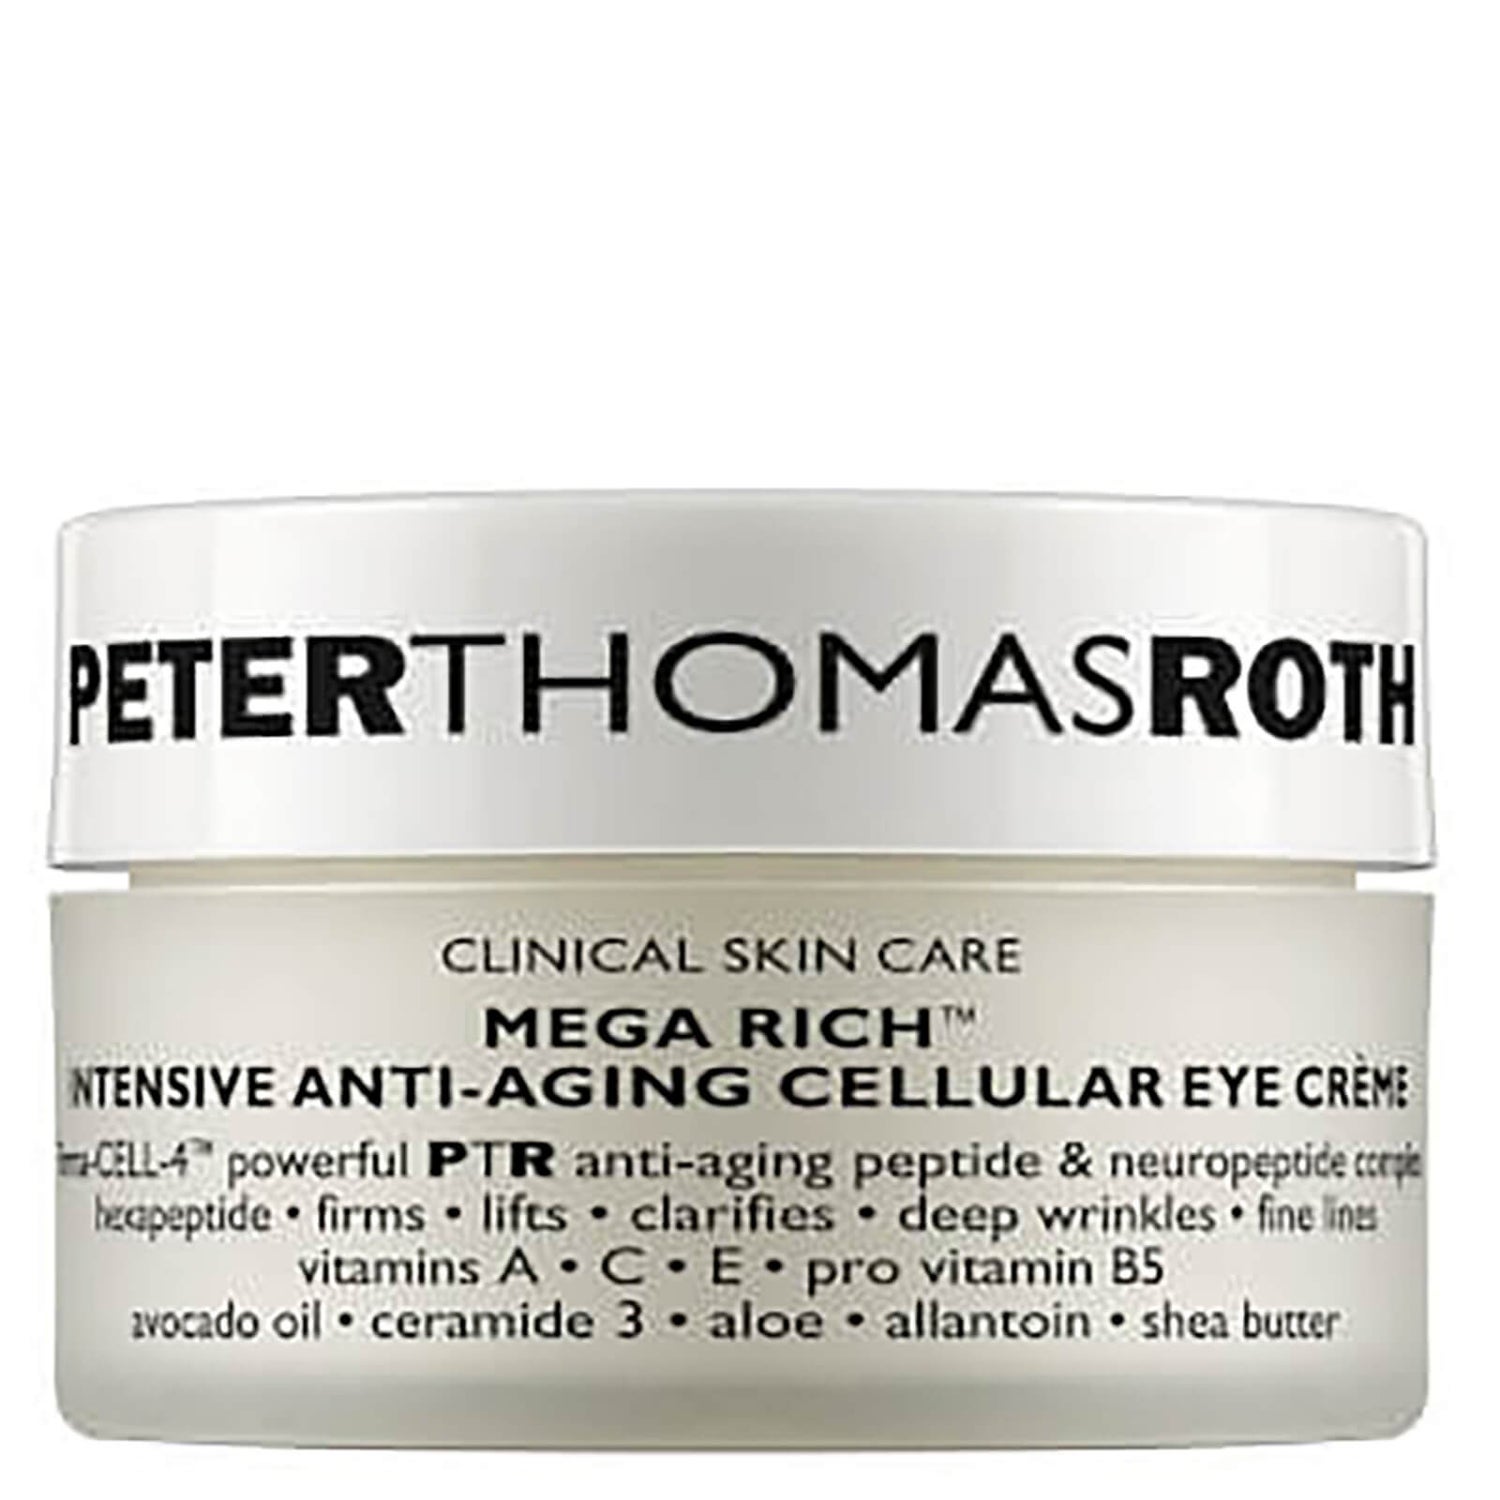 Peter Thomas Roth Mega Rich Intensive Anti-Aging Cellular Eye Cream (22 g)